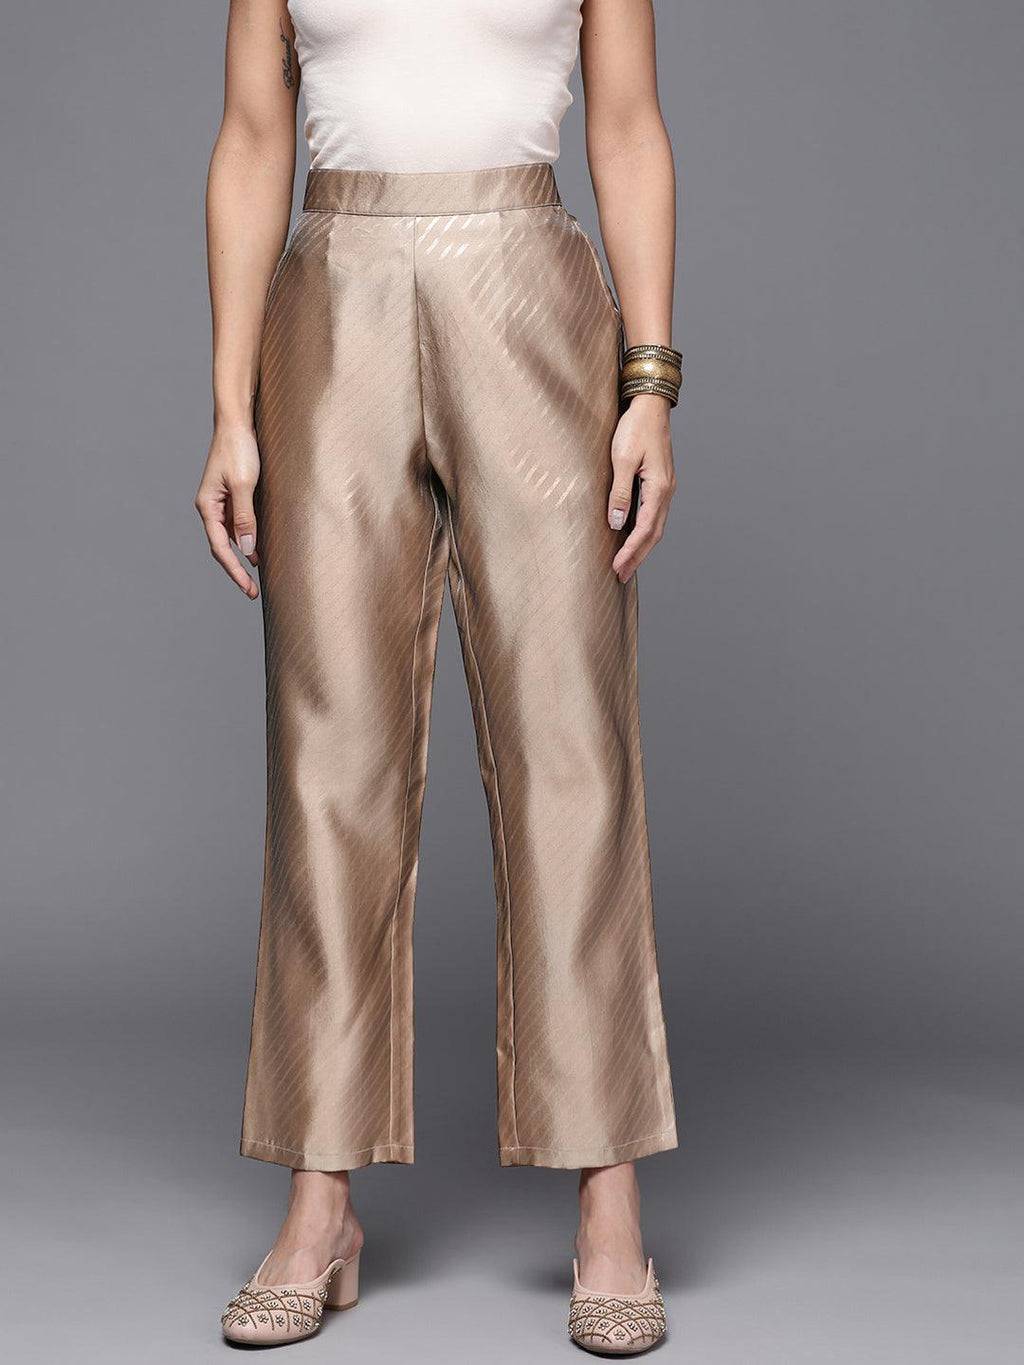 Buy Brown Printed Silk Trousers Online at Rs.587